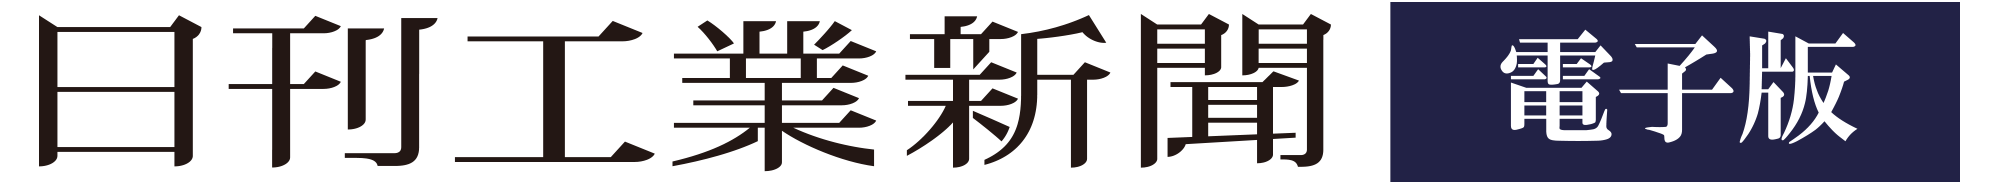 nikkan_logo